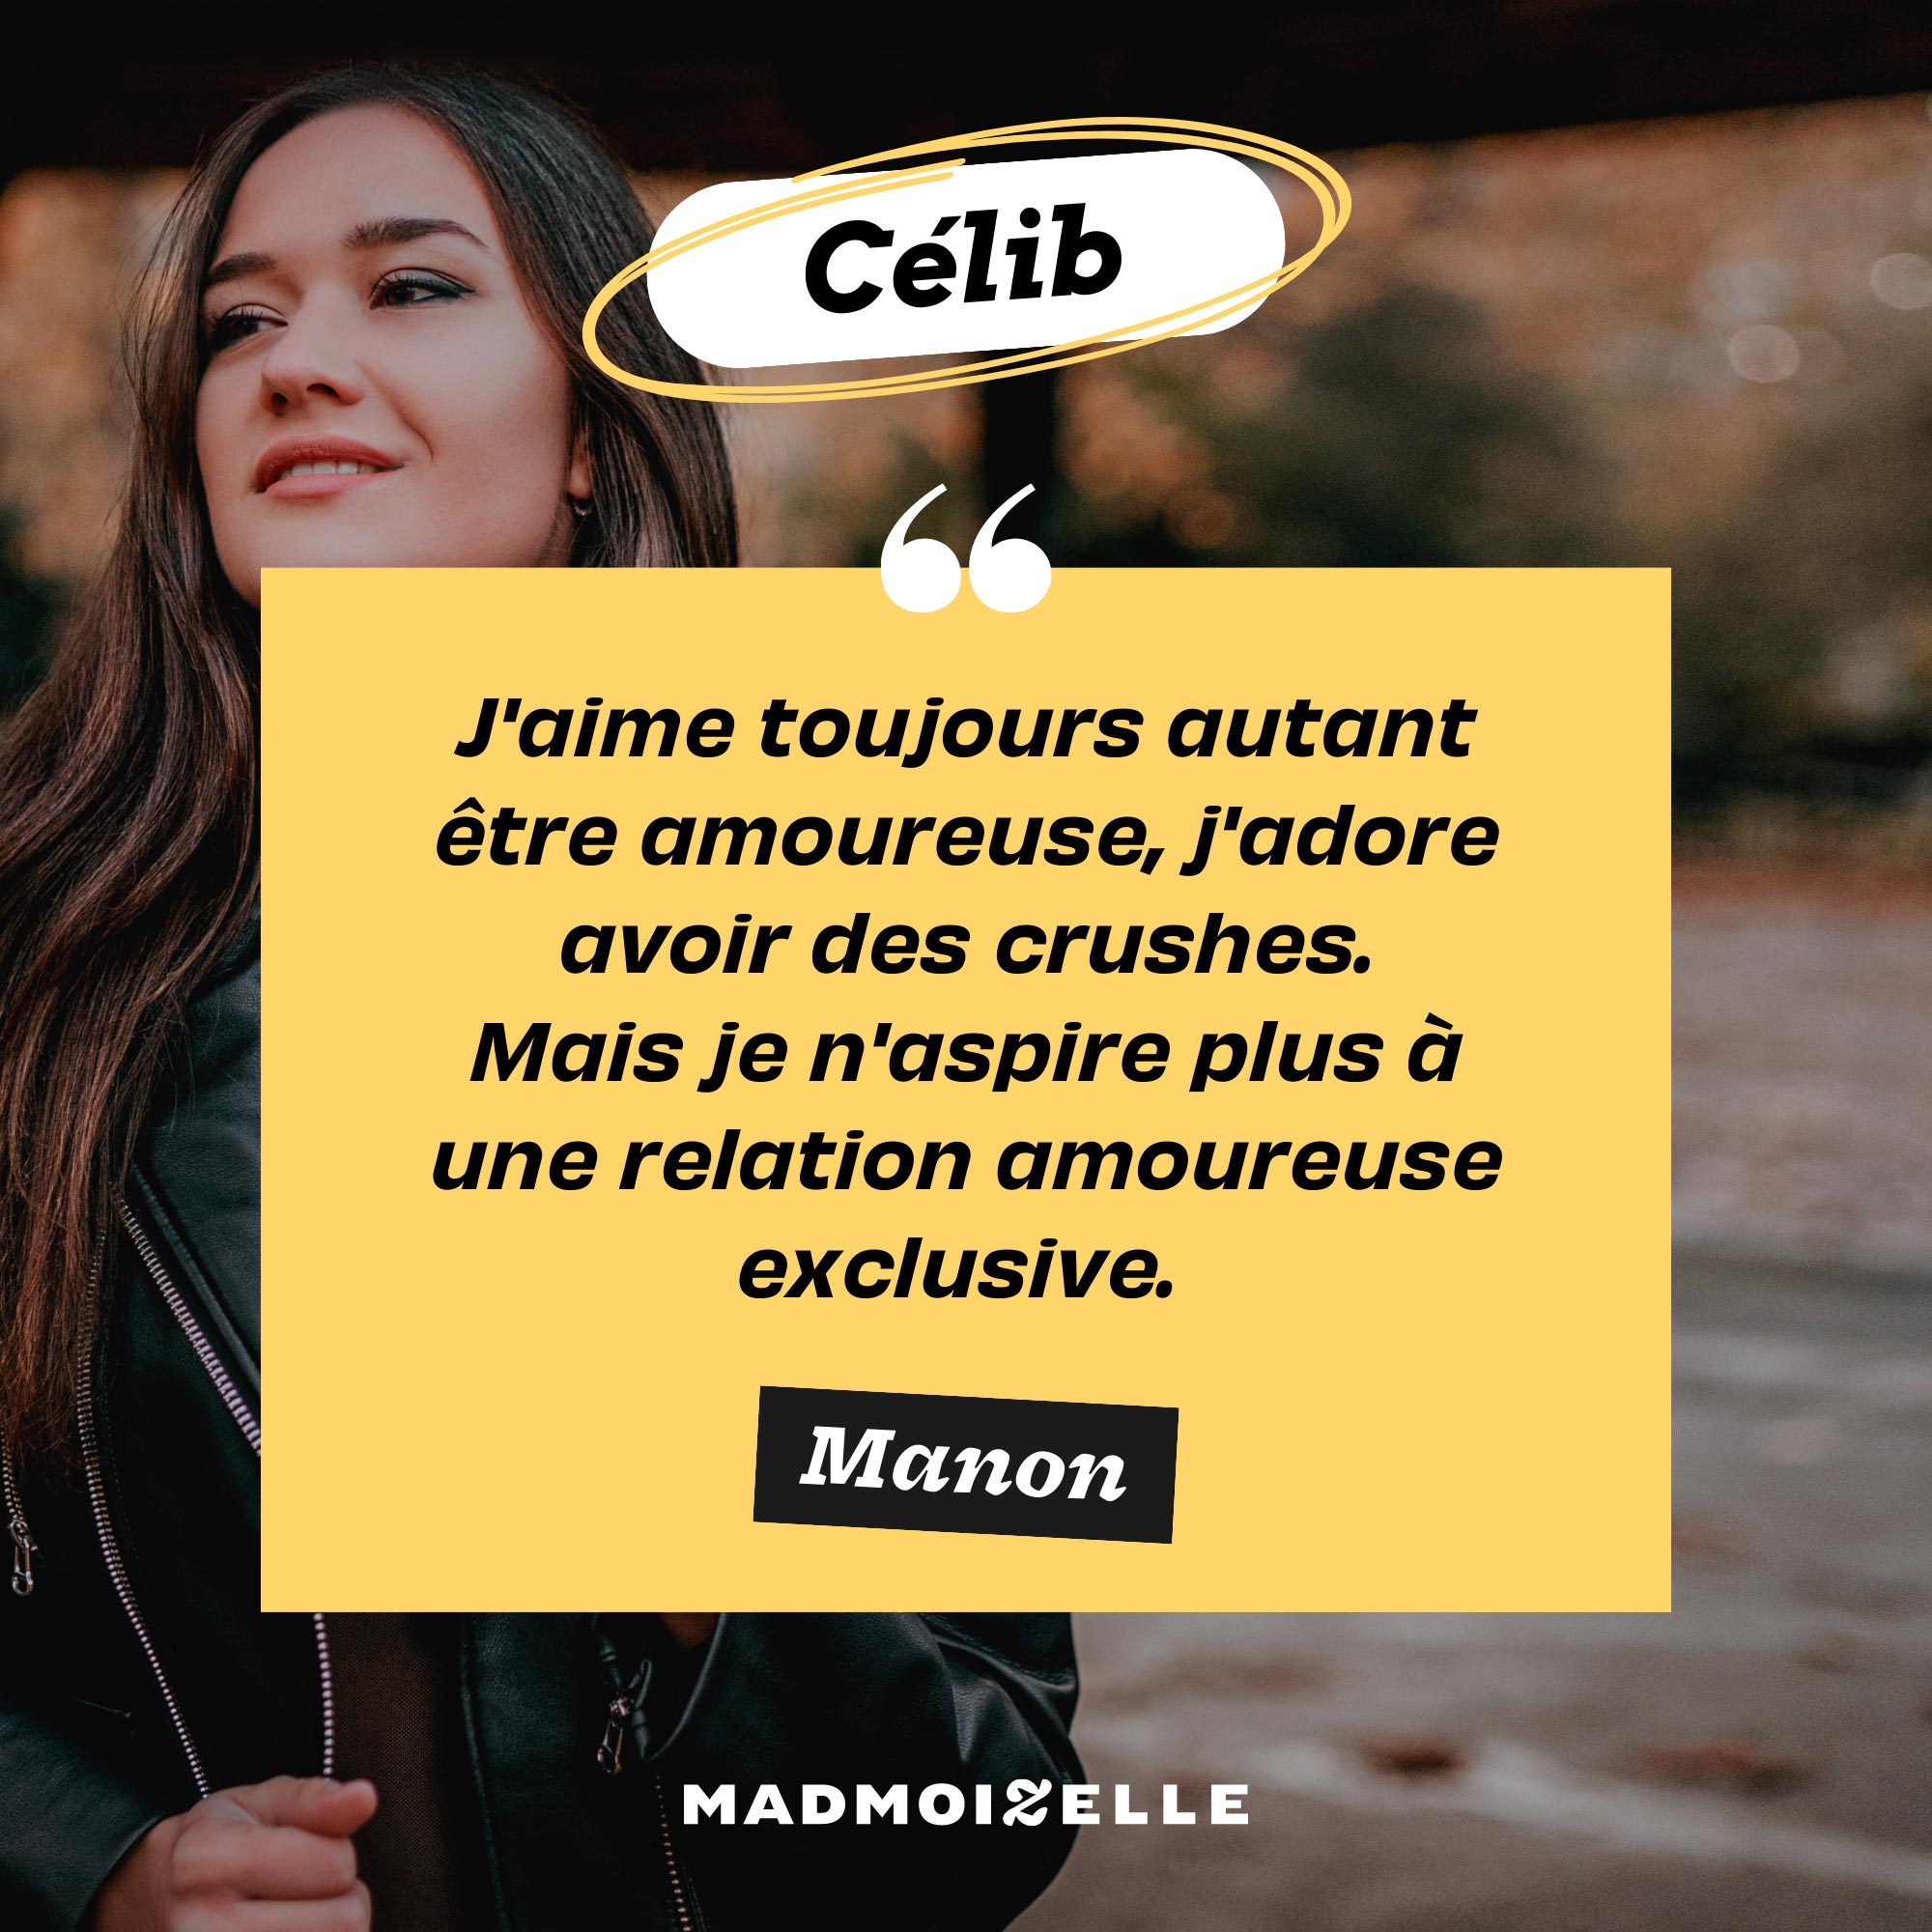 Celib_Manon_citation_carre